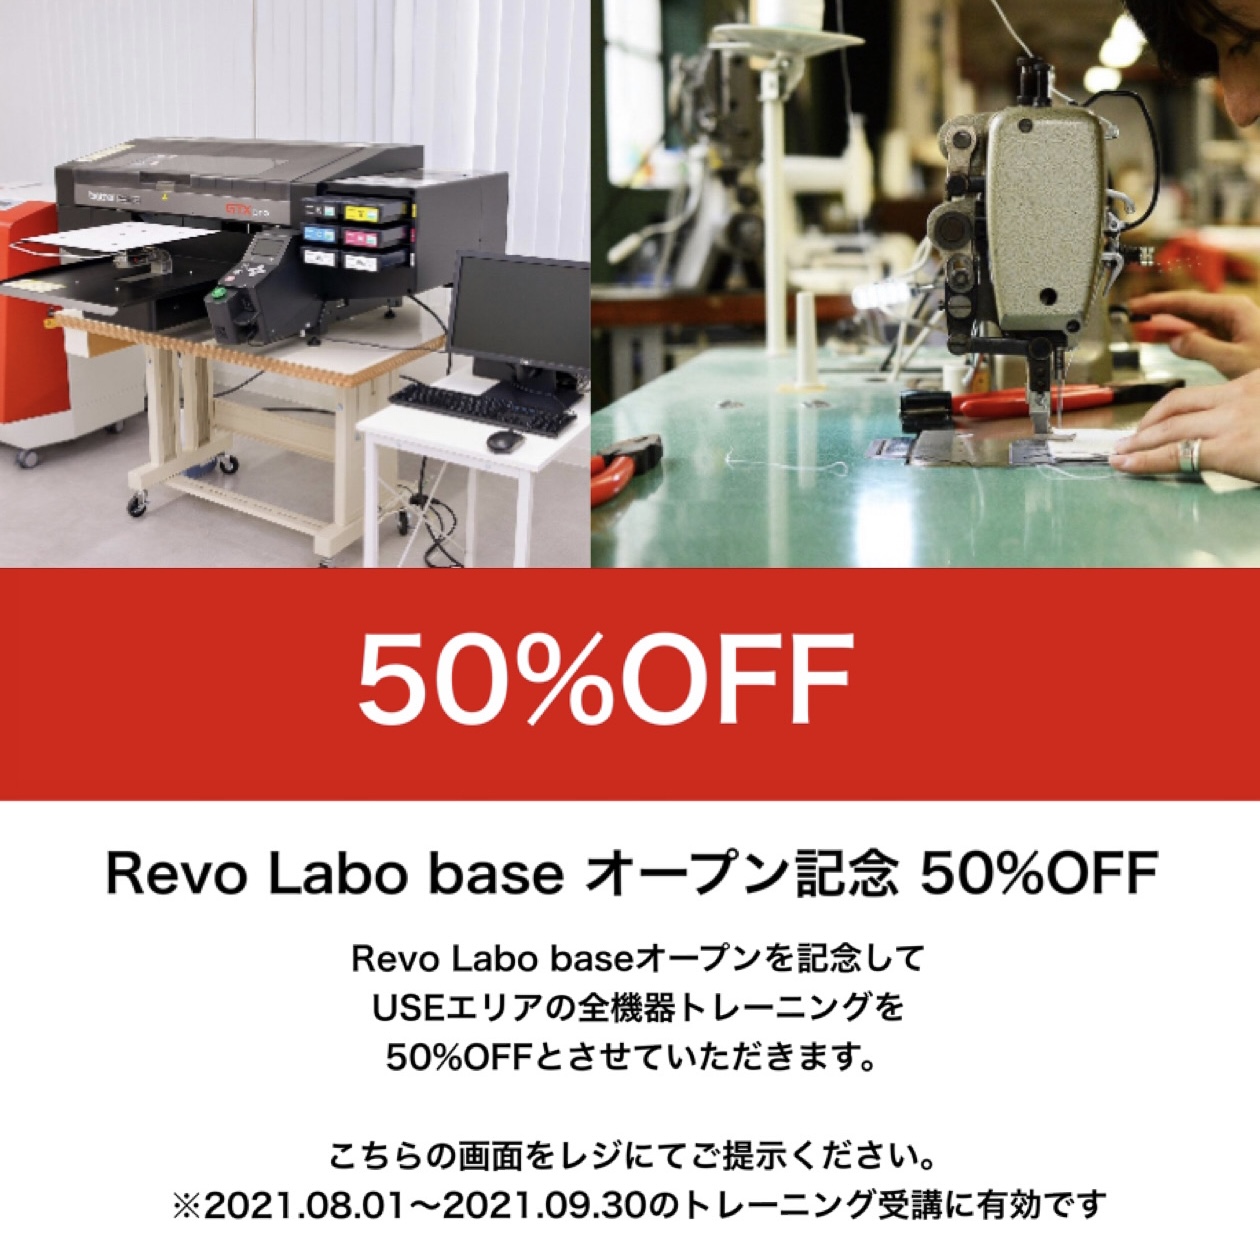 Revo Labo base オープン記念50%off